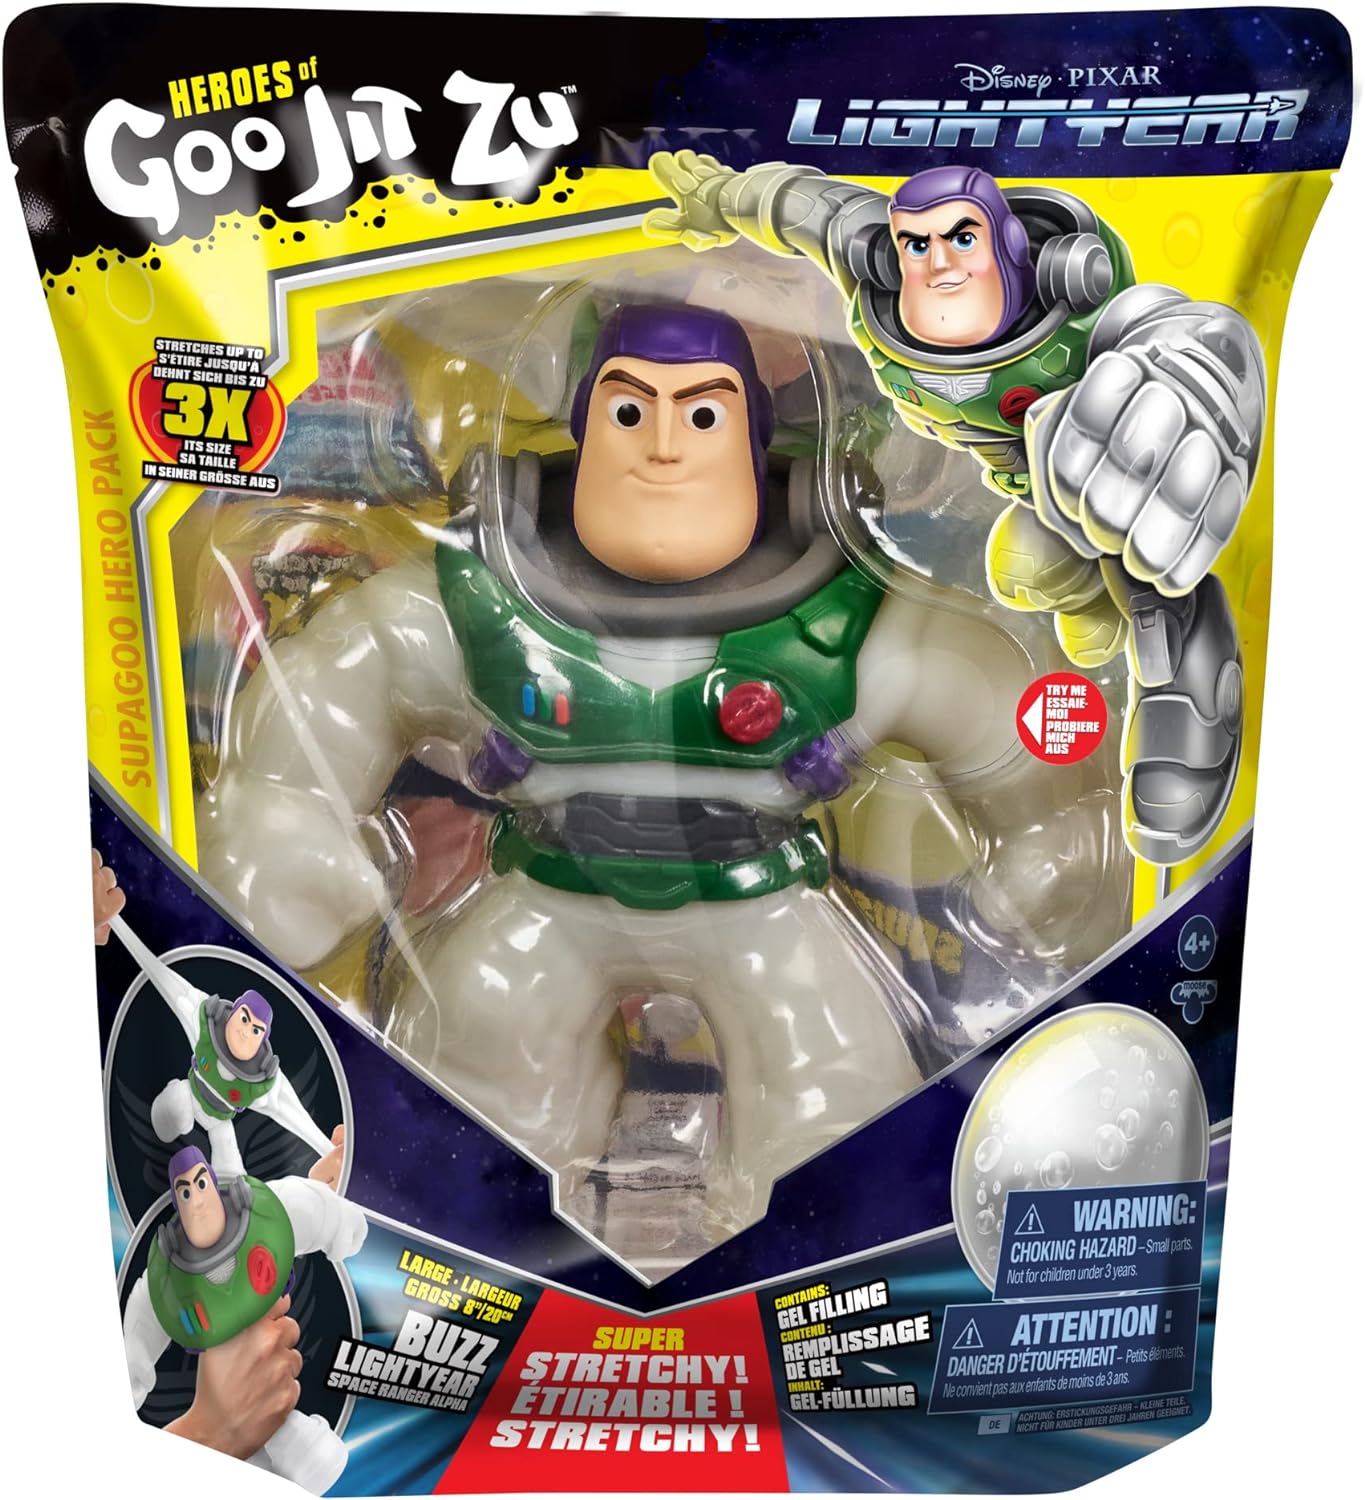 8" Heroes of Goo Jit Zu Buzz Lightyear Jumbo Figure $6.10  + Free S&H w/ Walmart+ or $35+